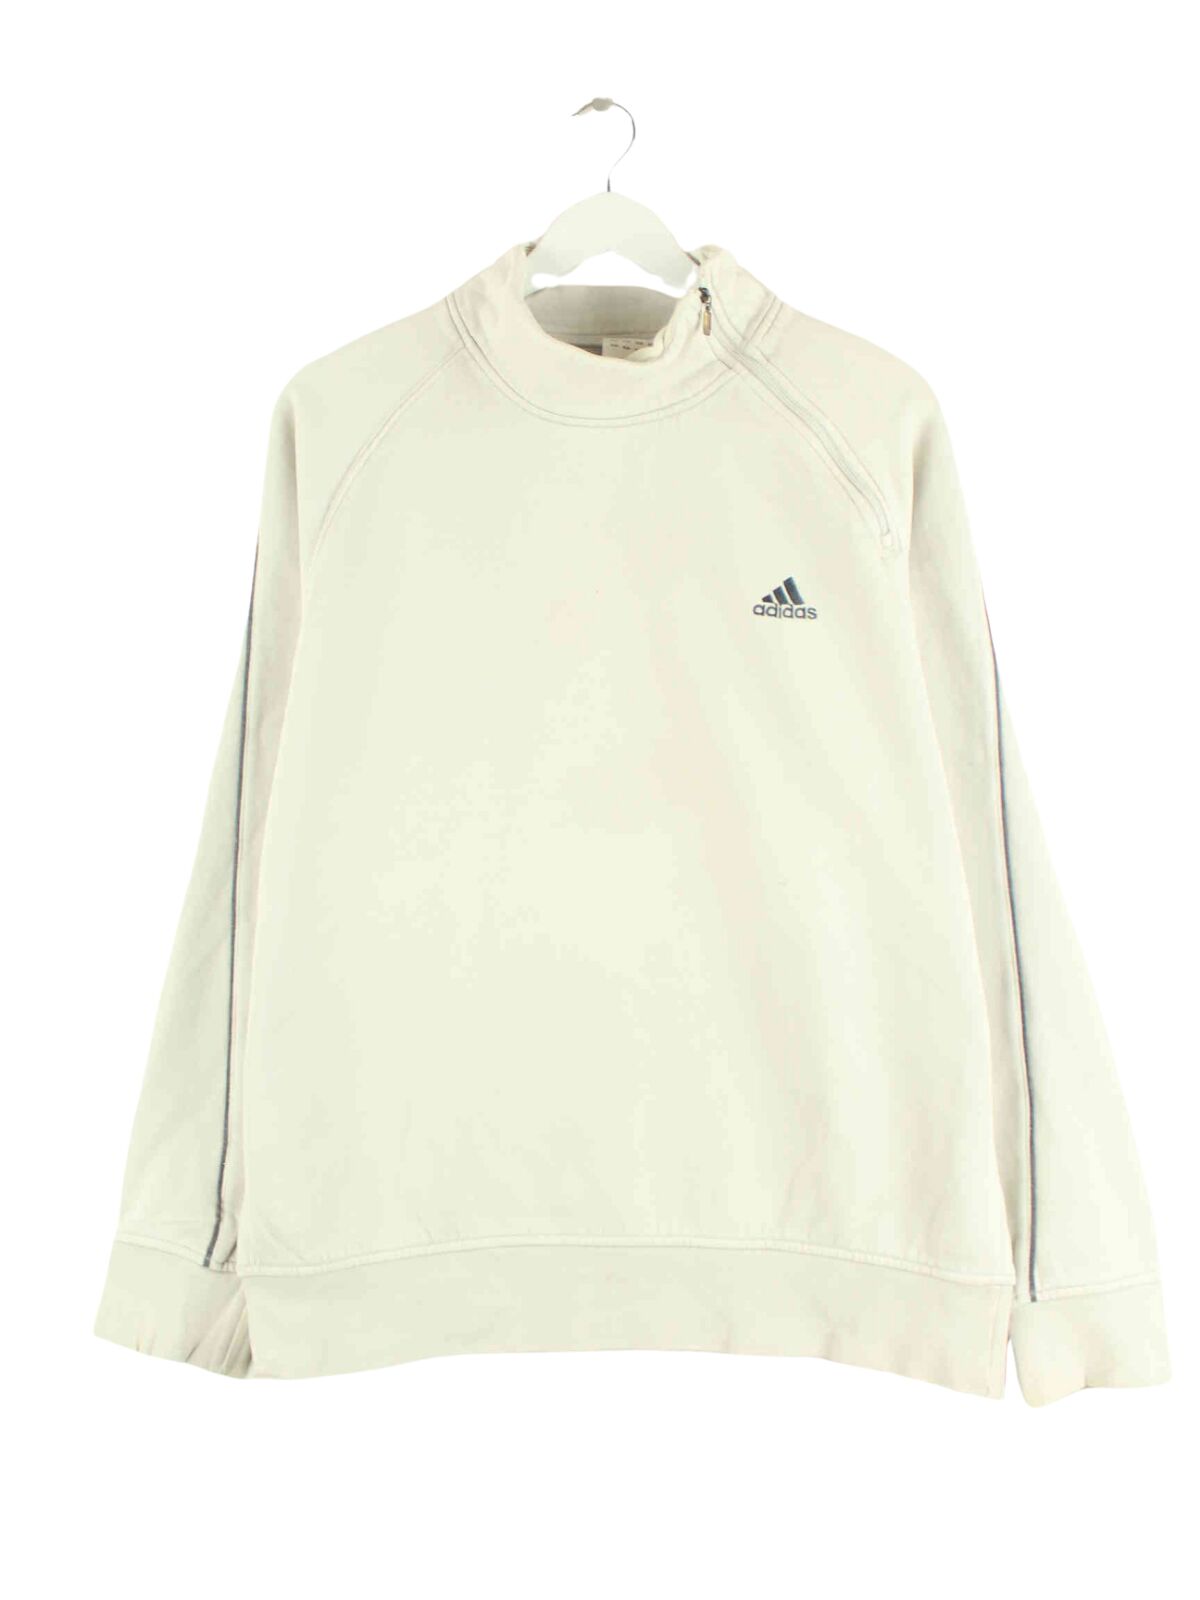 Adidas Damen Performance Sweater Beige L (front image)